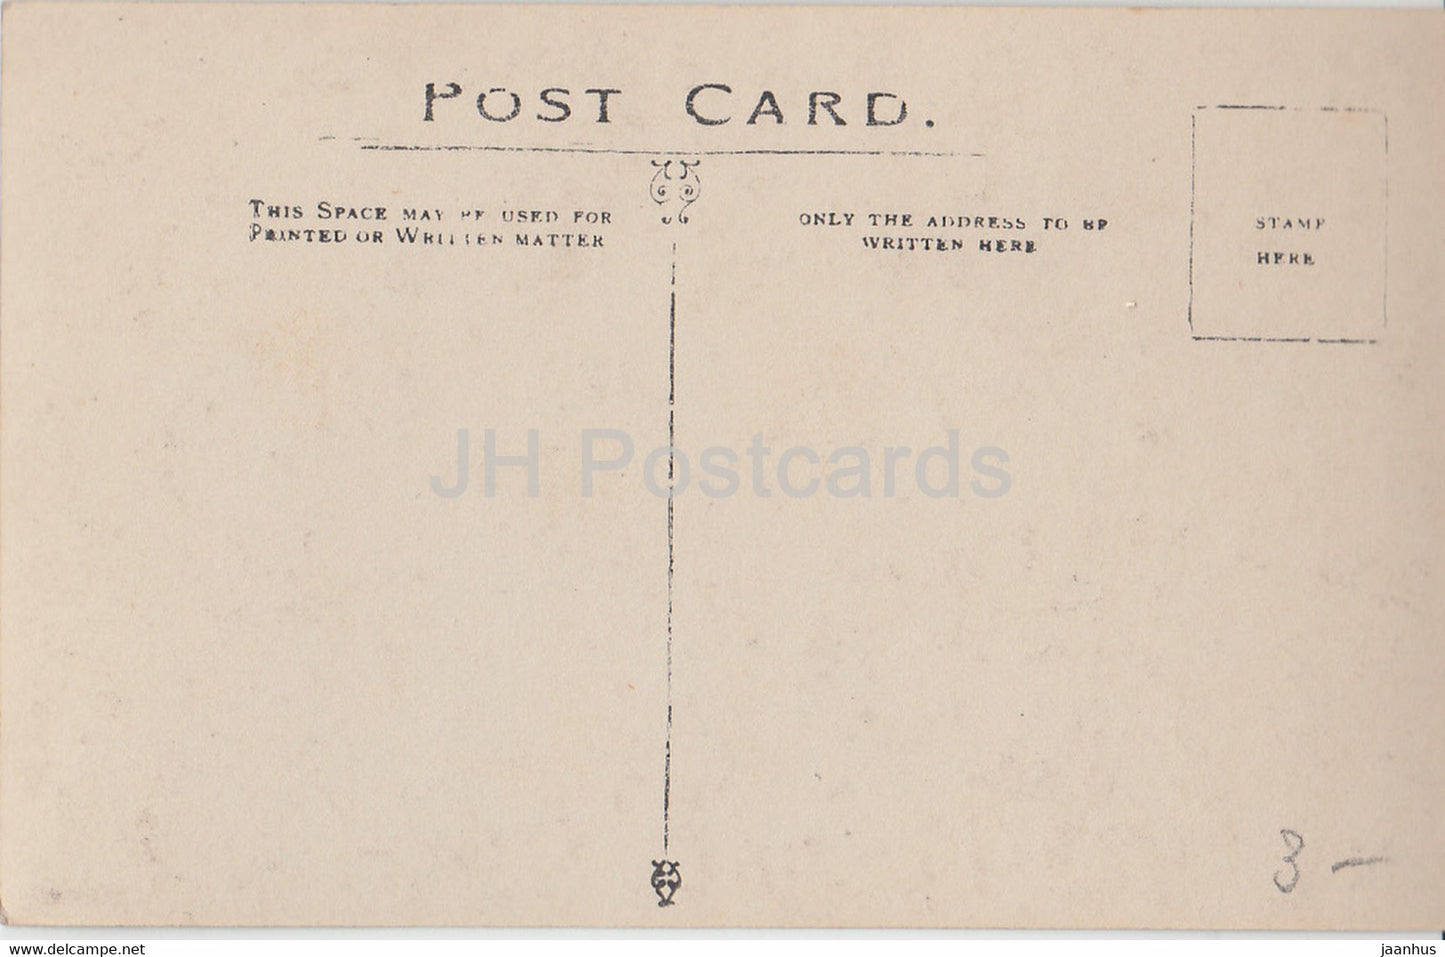 Wellington - Crescent Ramsgate - carte postale ancienne - Angleterre - Royaume-Uni - inutilisée